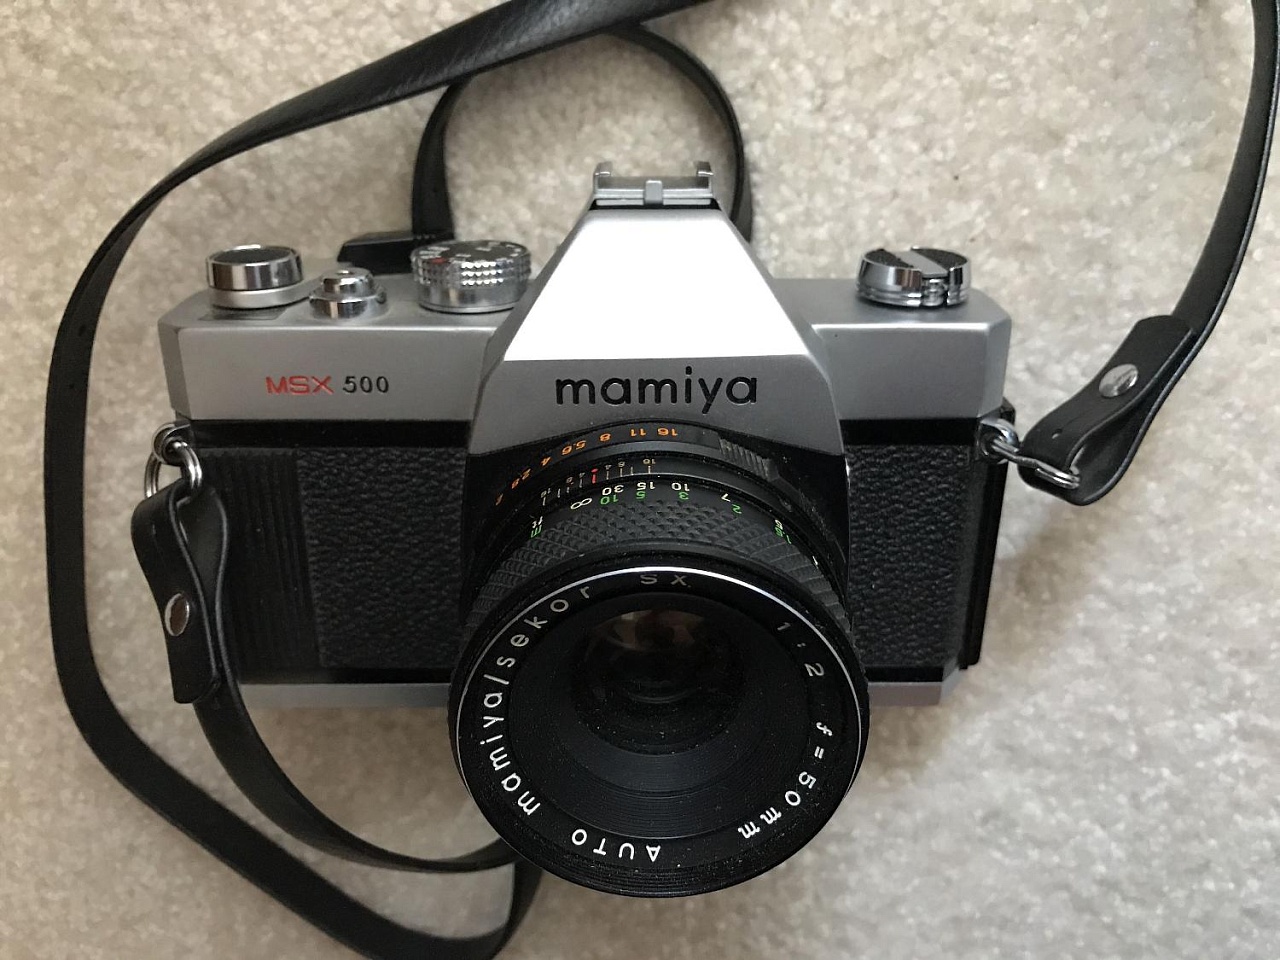 Mamiya MSX 500 + Auto Mamiya/Sekor sx 1:2 50mm фото №1